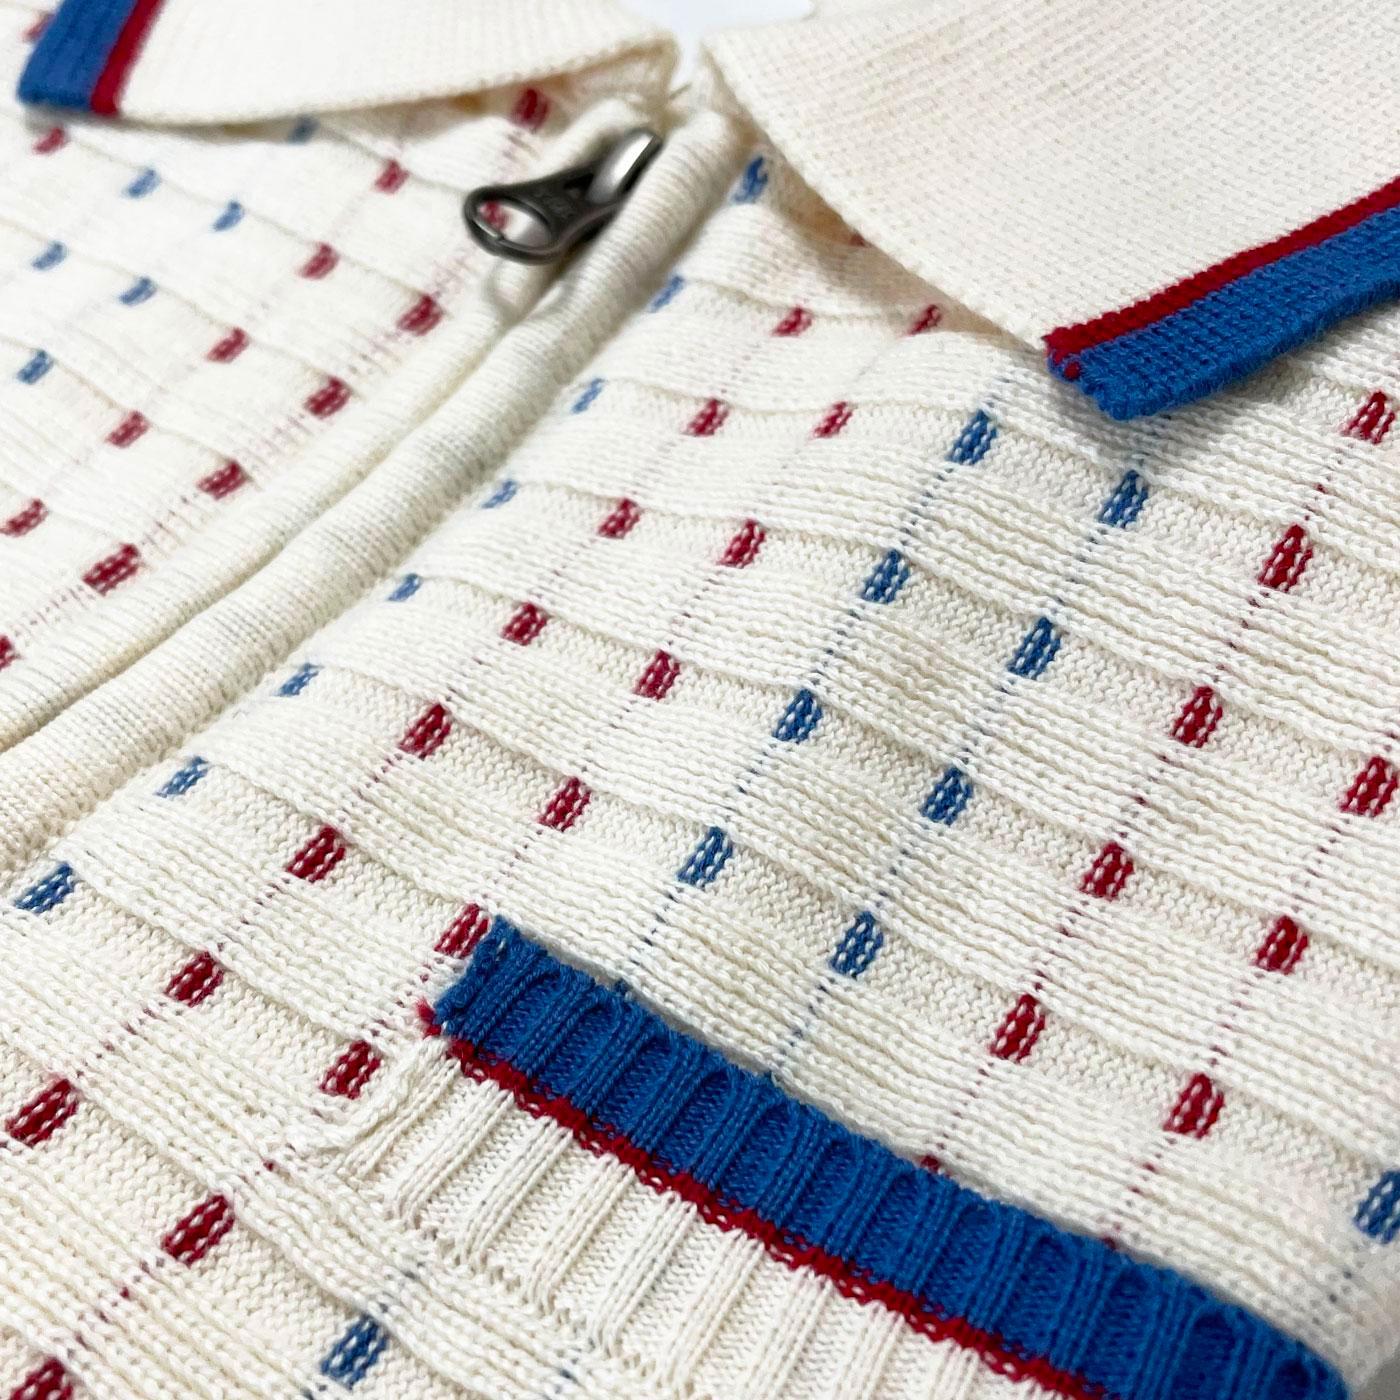 Jacquard-knit polo shirt with micro pattern